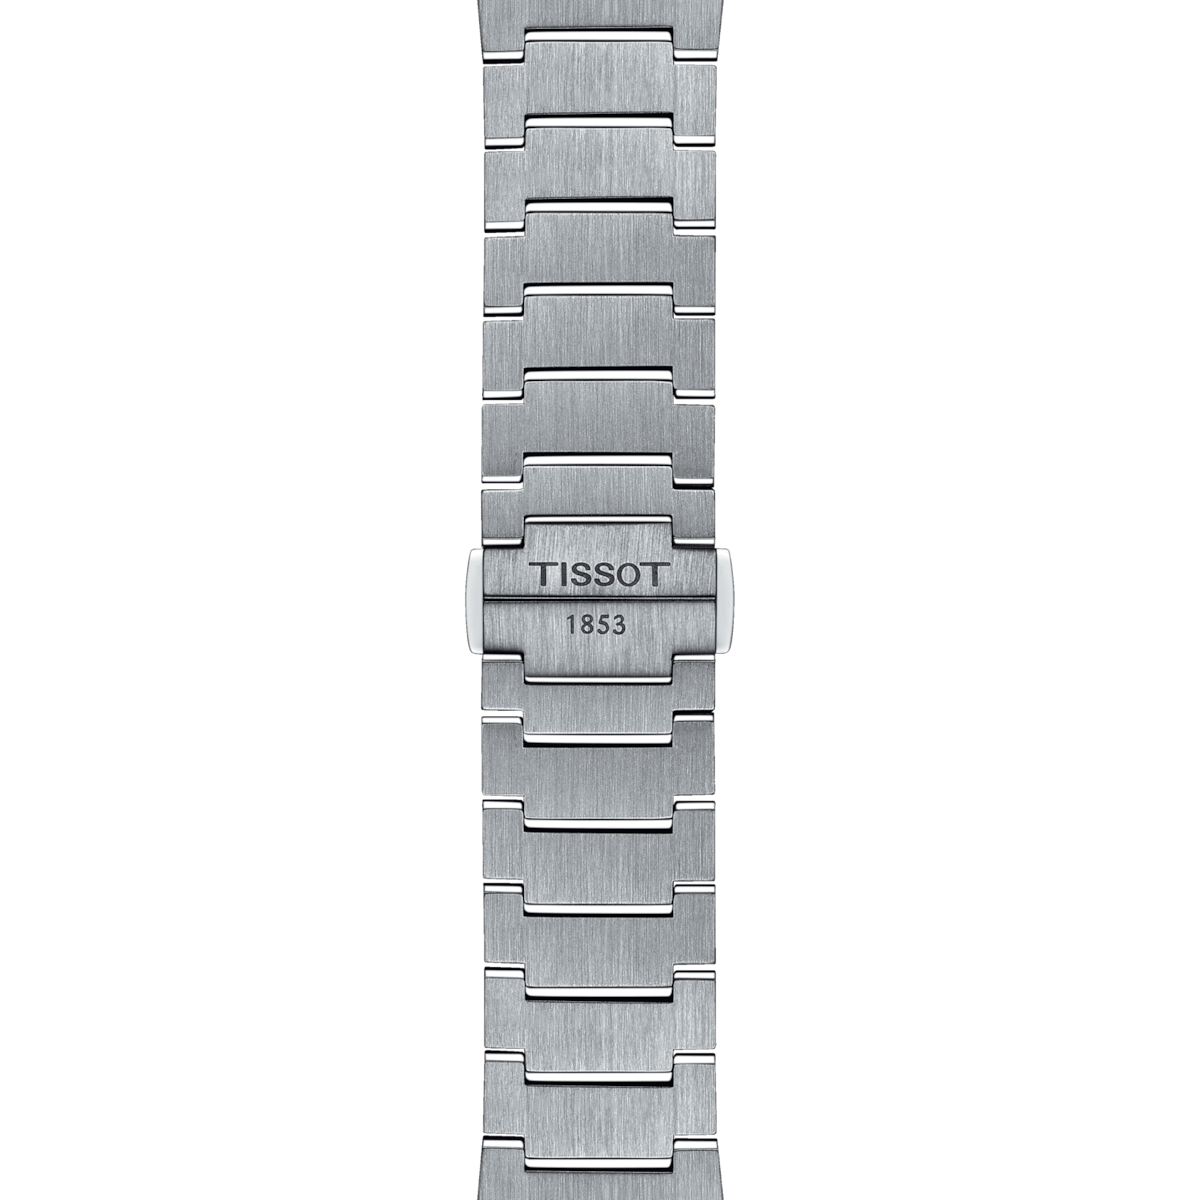 Tissot - PRX Stainless Steel Bracelet Black Dial Men's Watch - 137.410.11.051.00